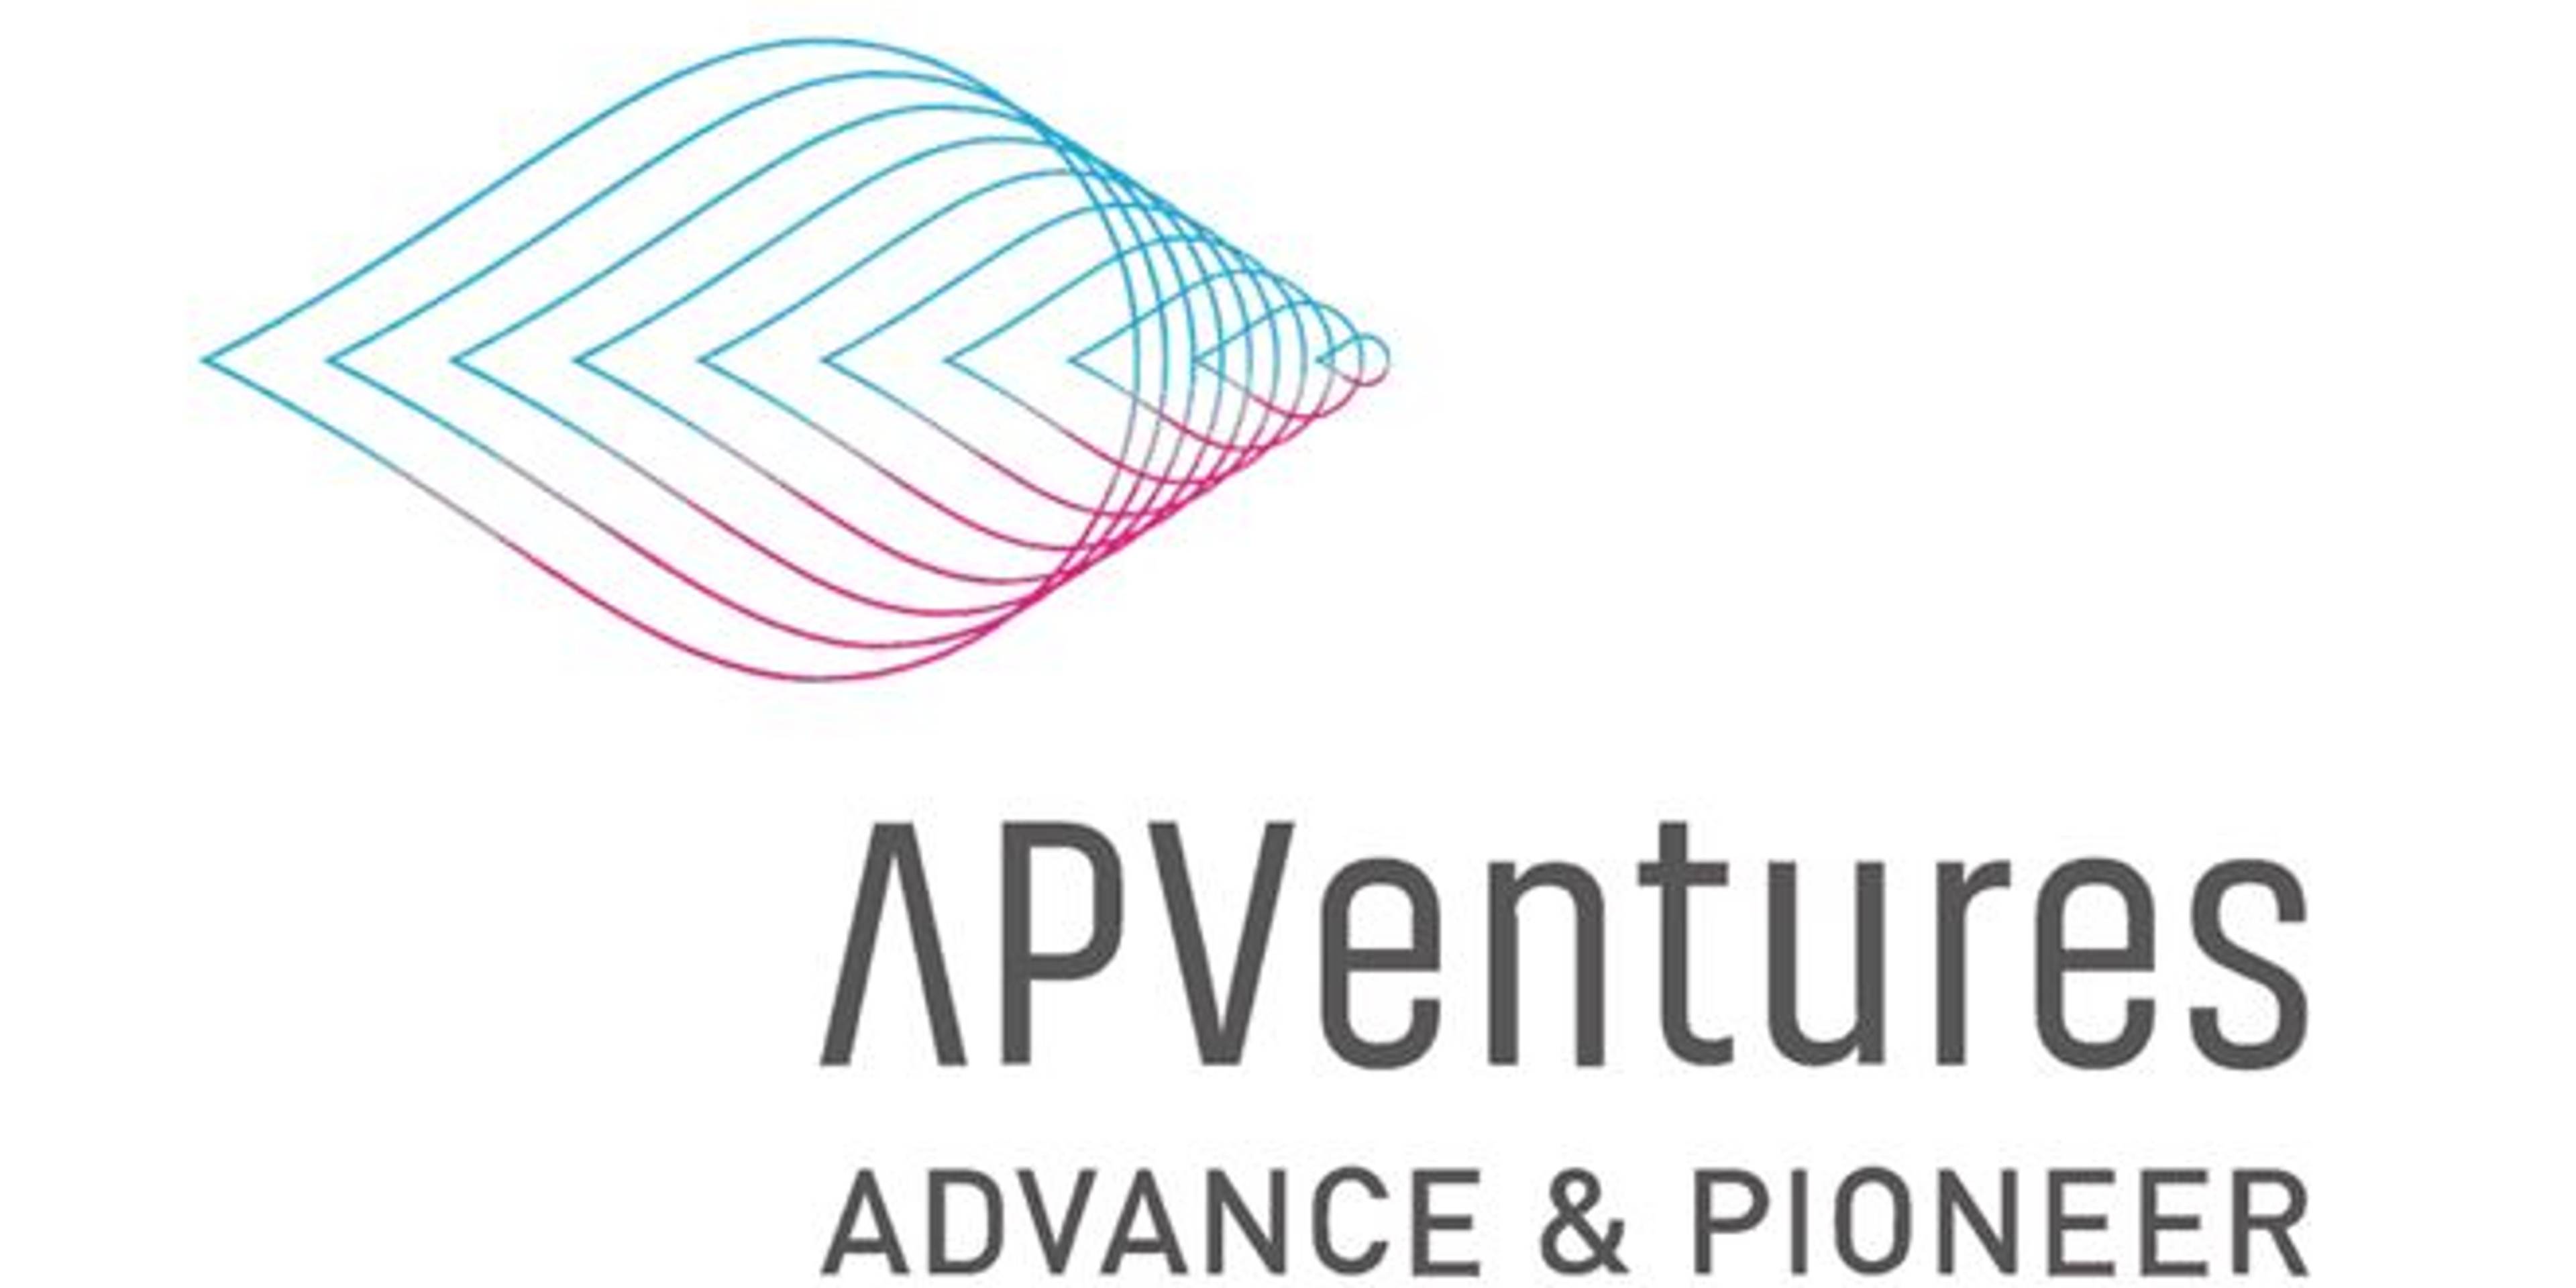 Equinor Ventures invests in AP Ventures - Equinor